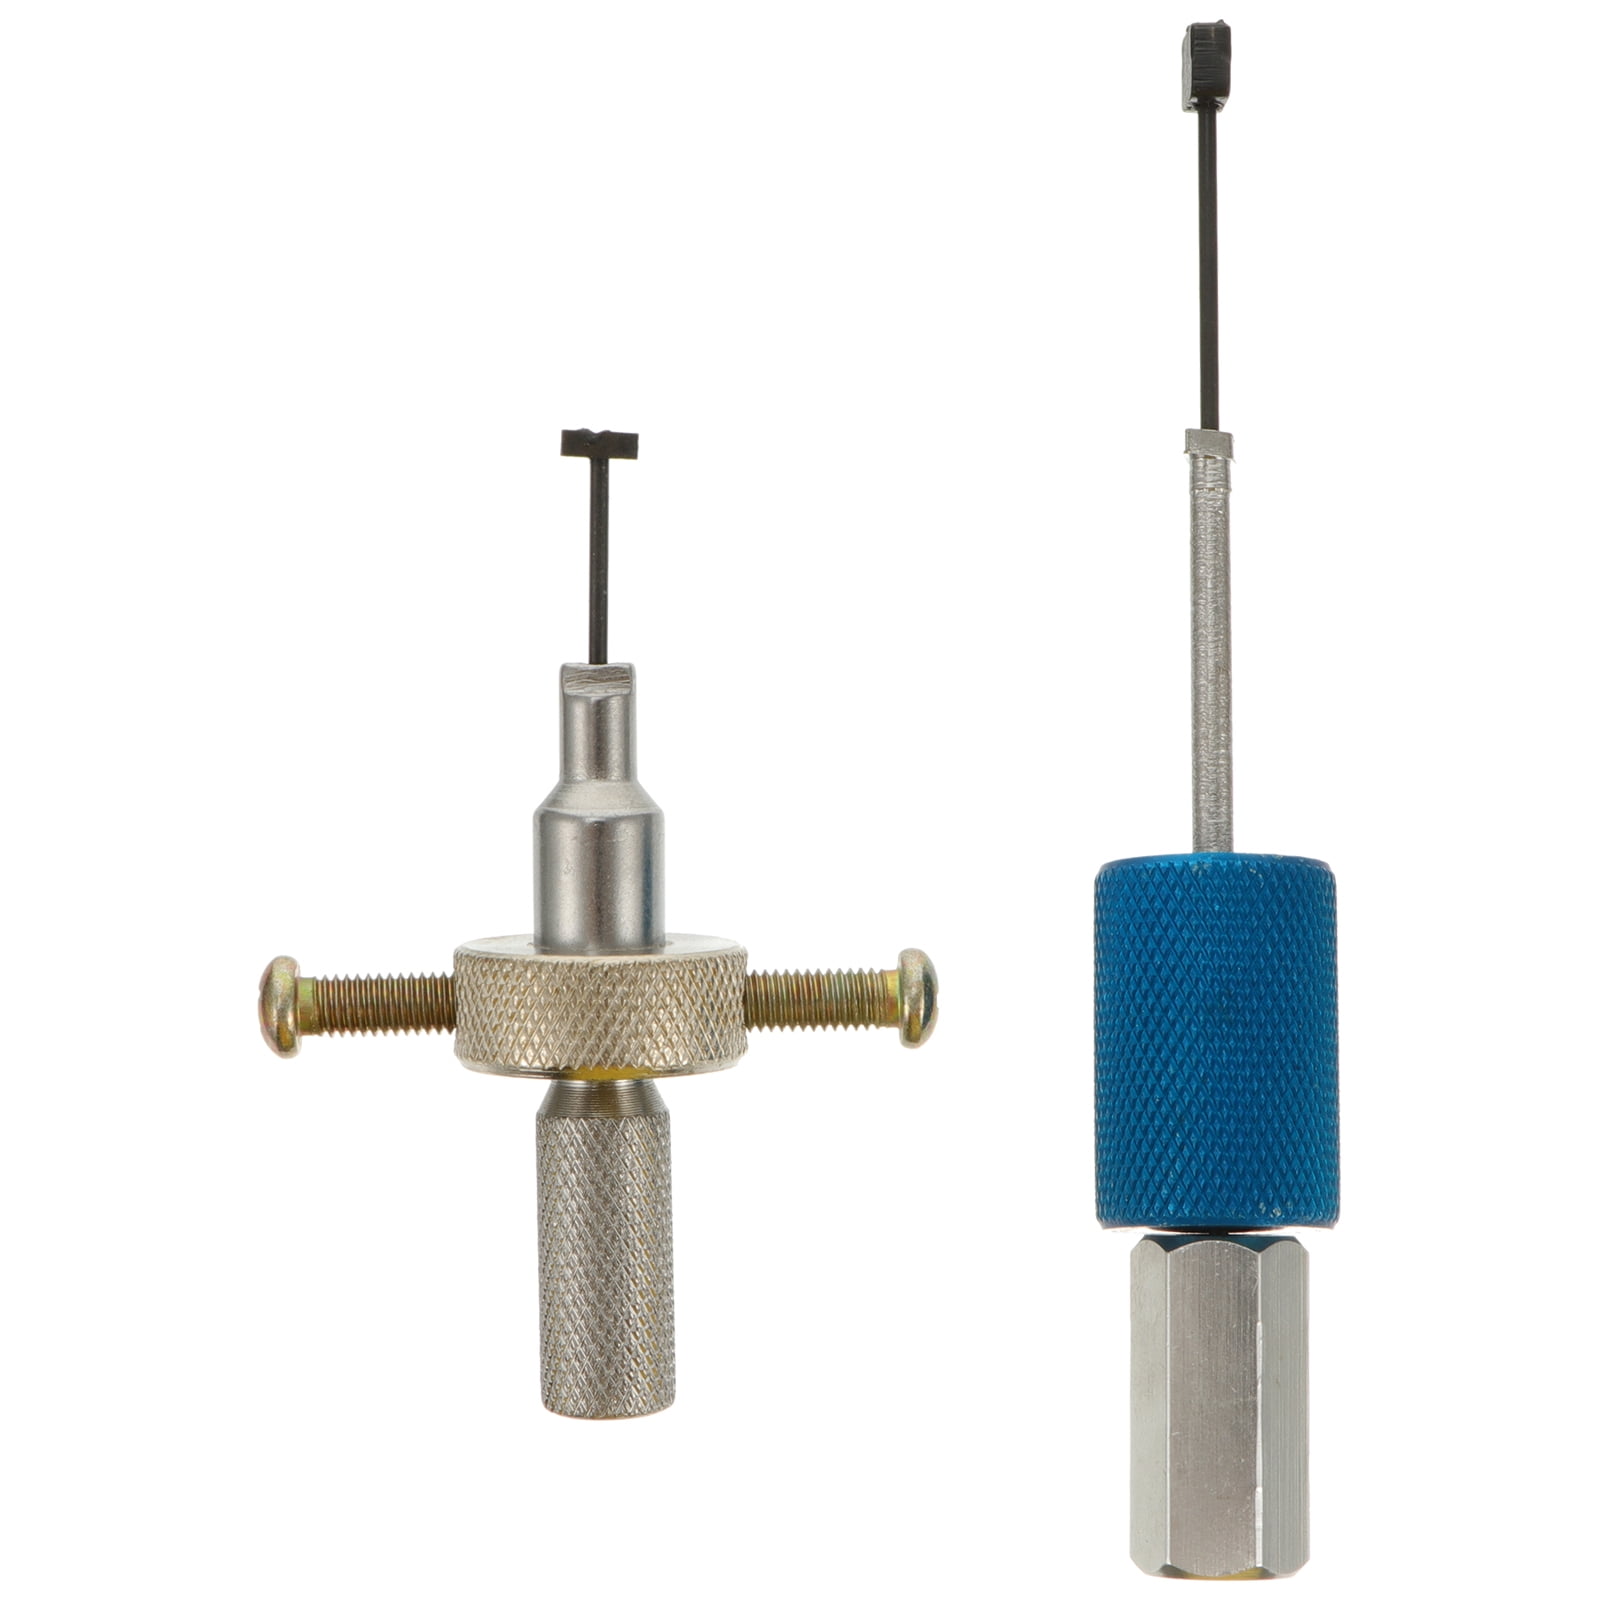 SC1 Key Blanks Fit SCHLAGE Nickel Uncut Key Colorful Plastic Handle  Locksmith Tools - AliExpress